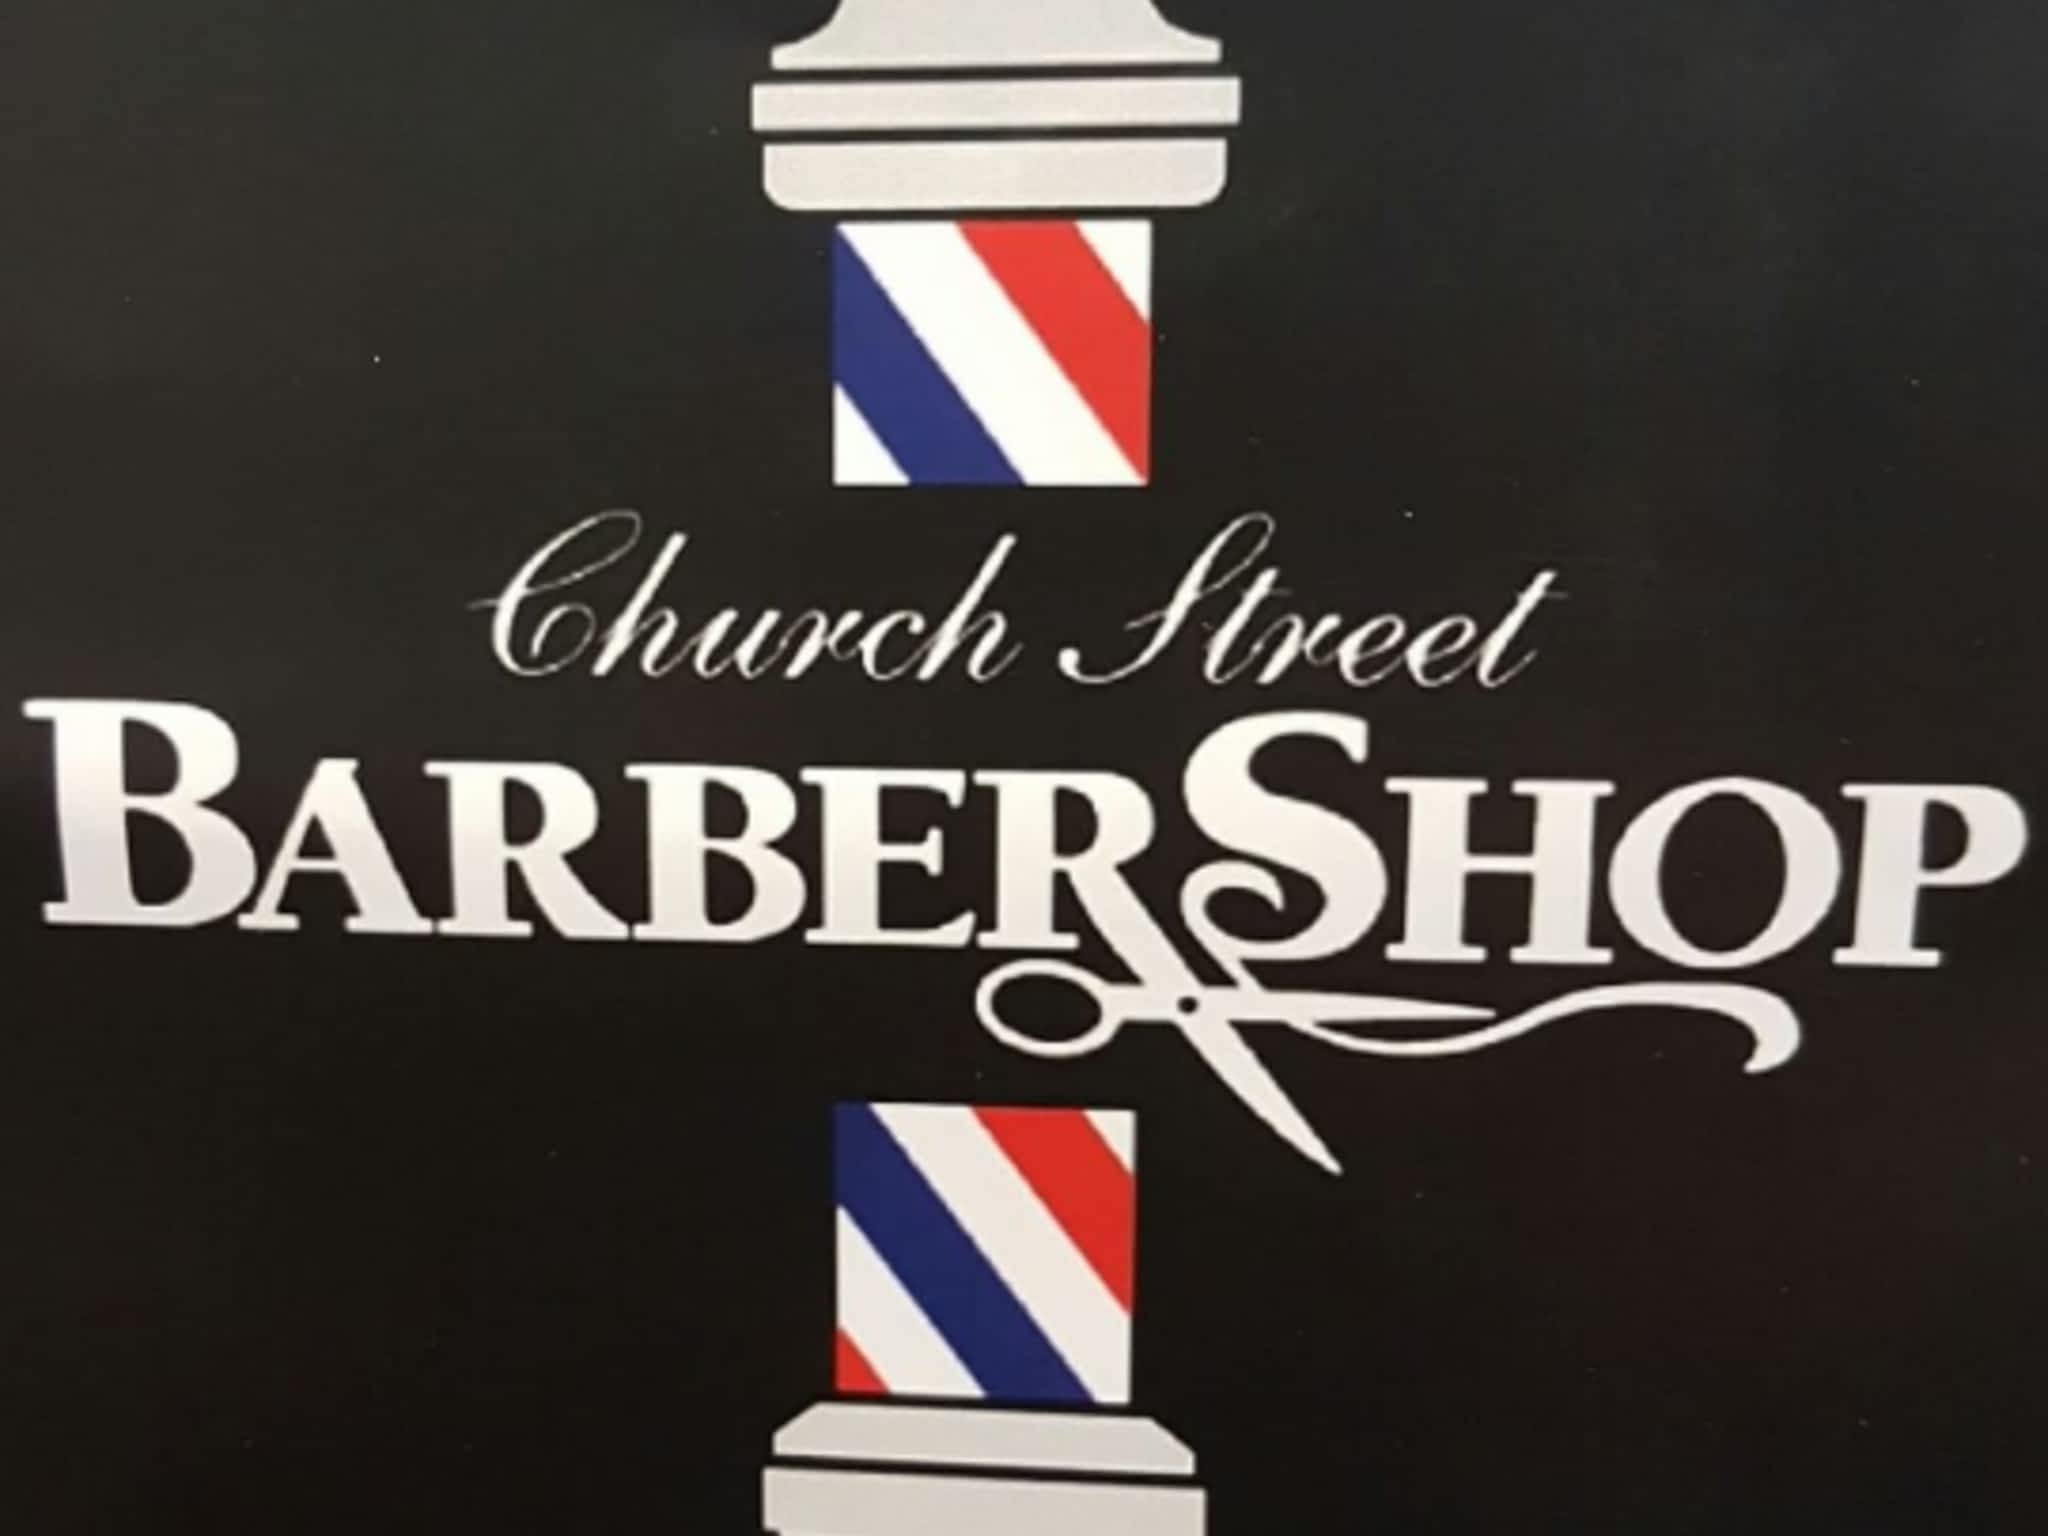 photo Church Street Barber Shop